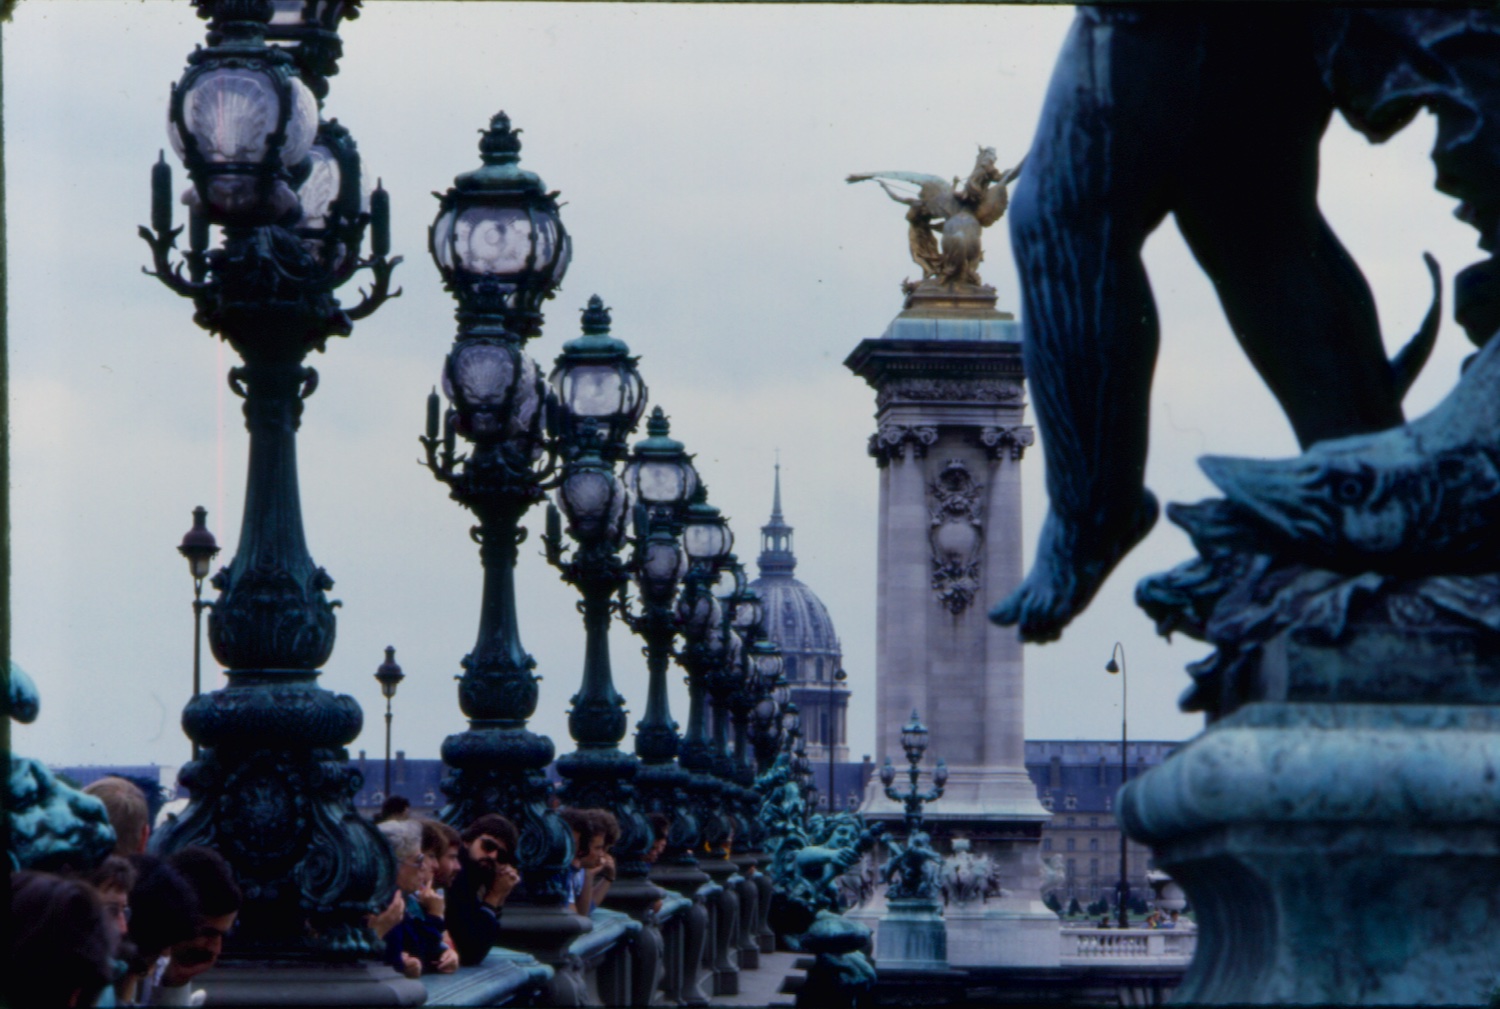 Paris scene from the movie 